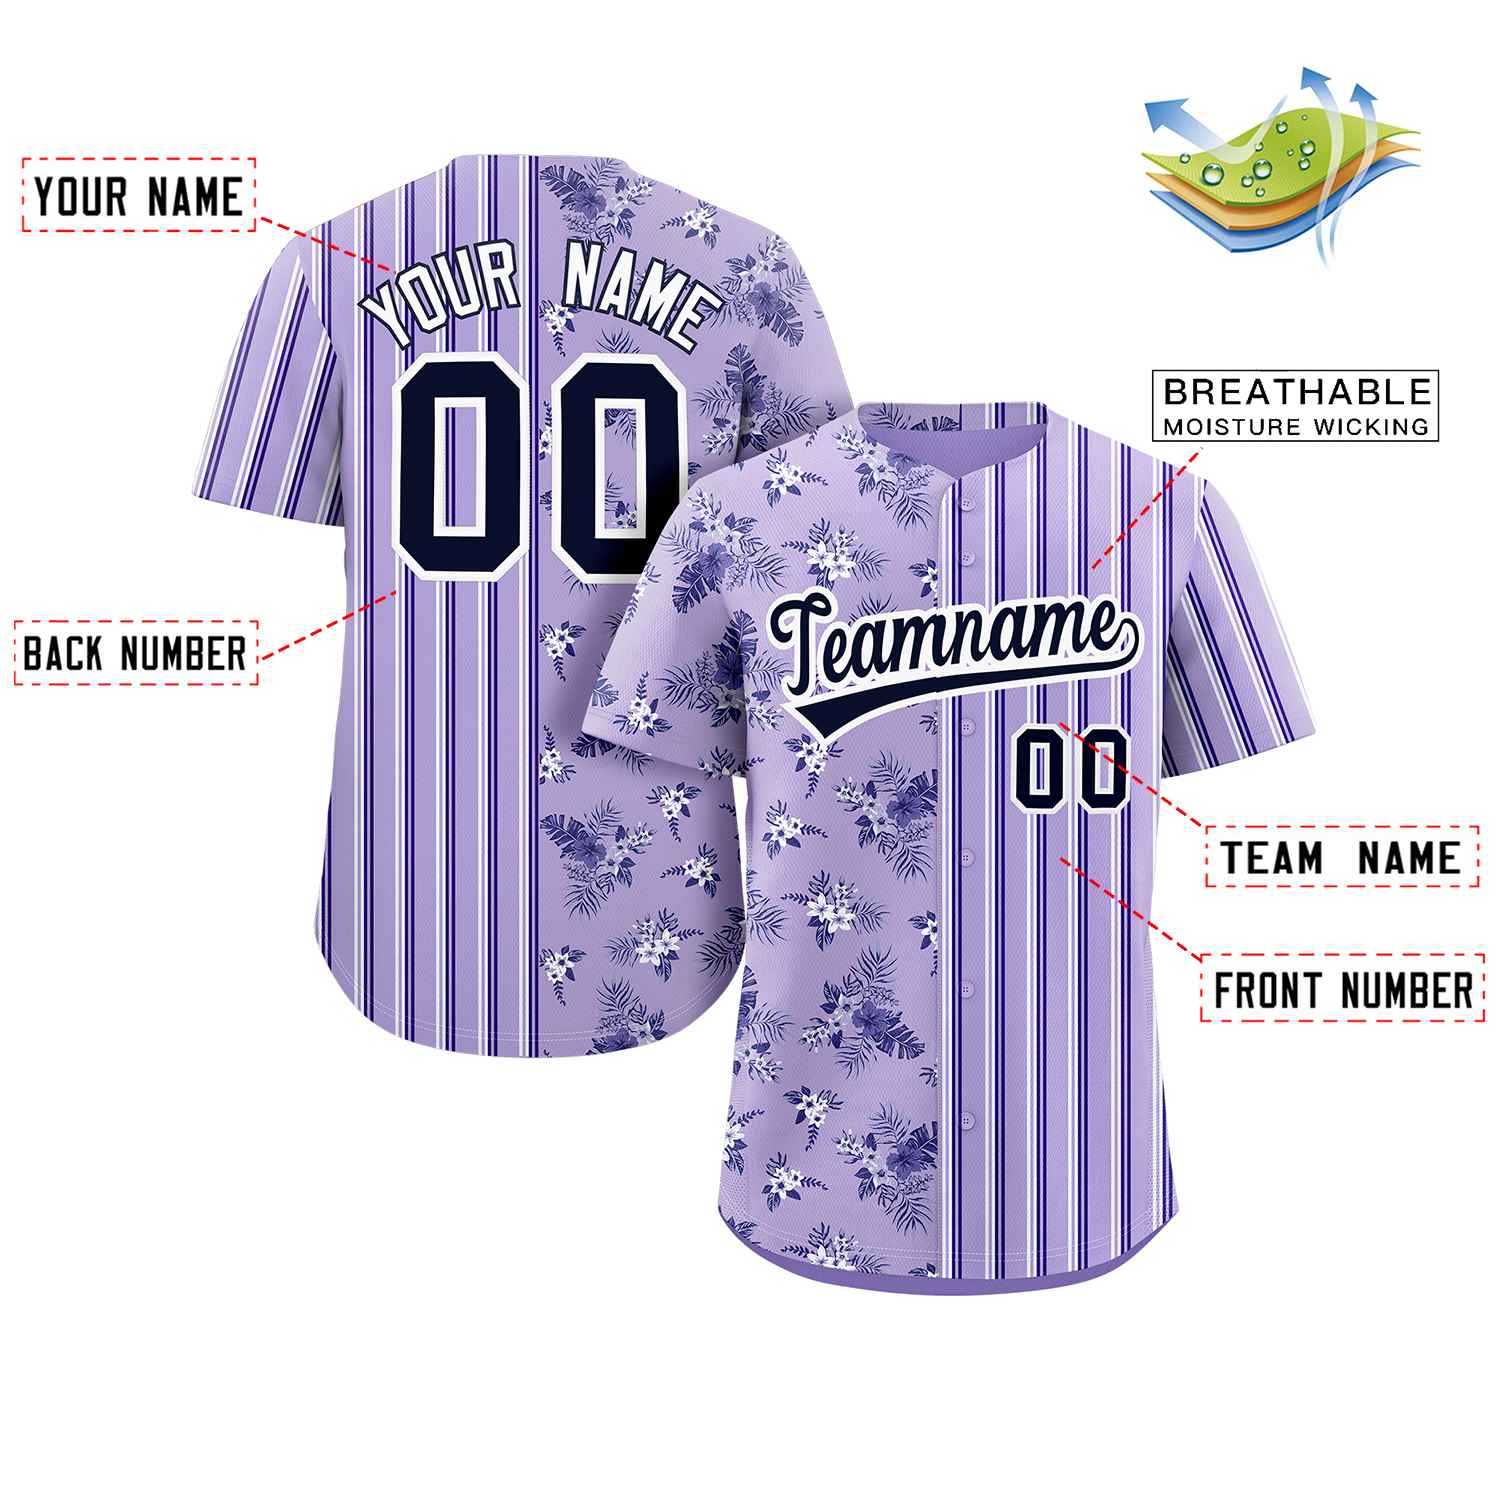 Custom Purple Black Hawaii Tropical Flower Stripe Fashion Baseball Jersey